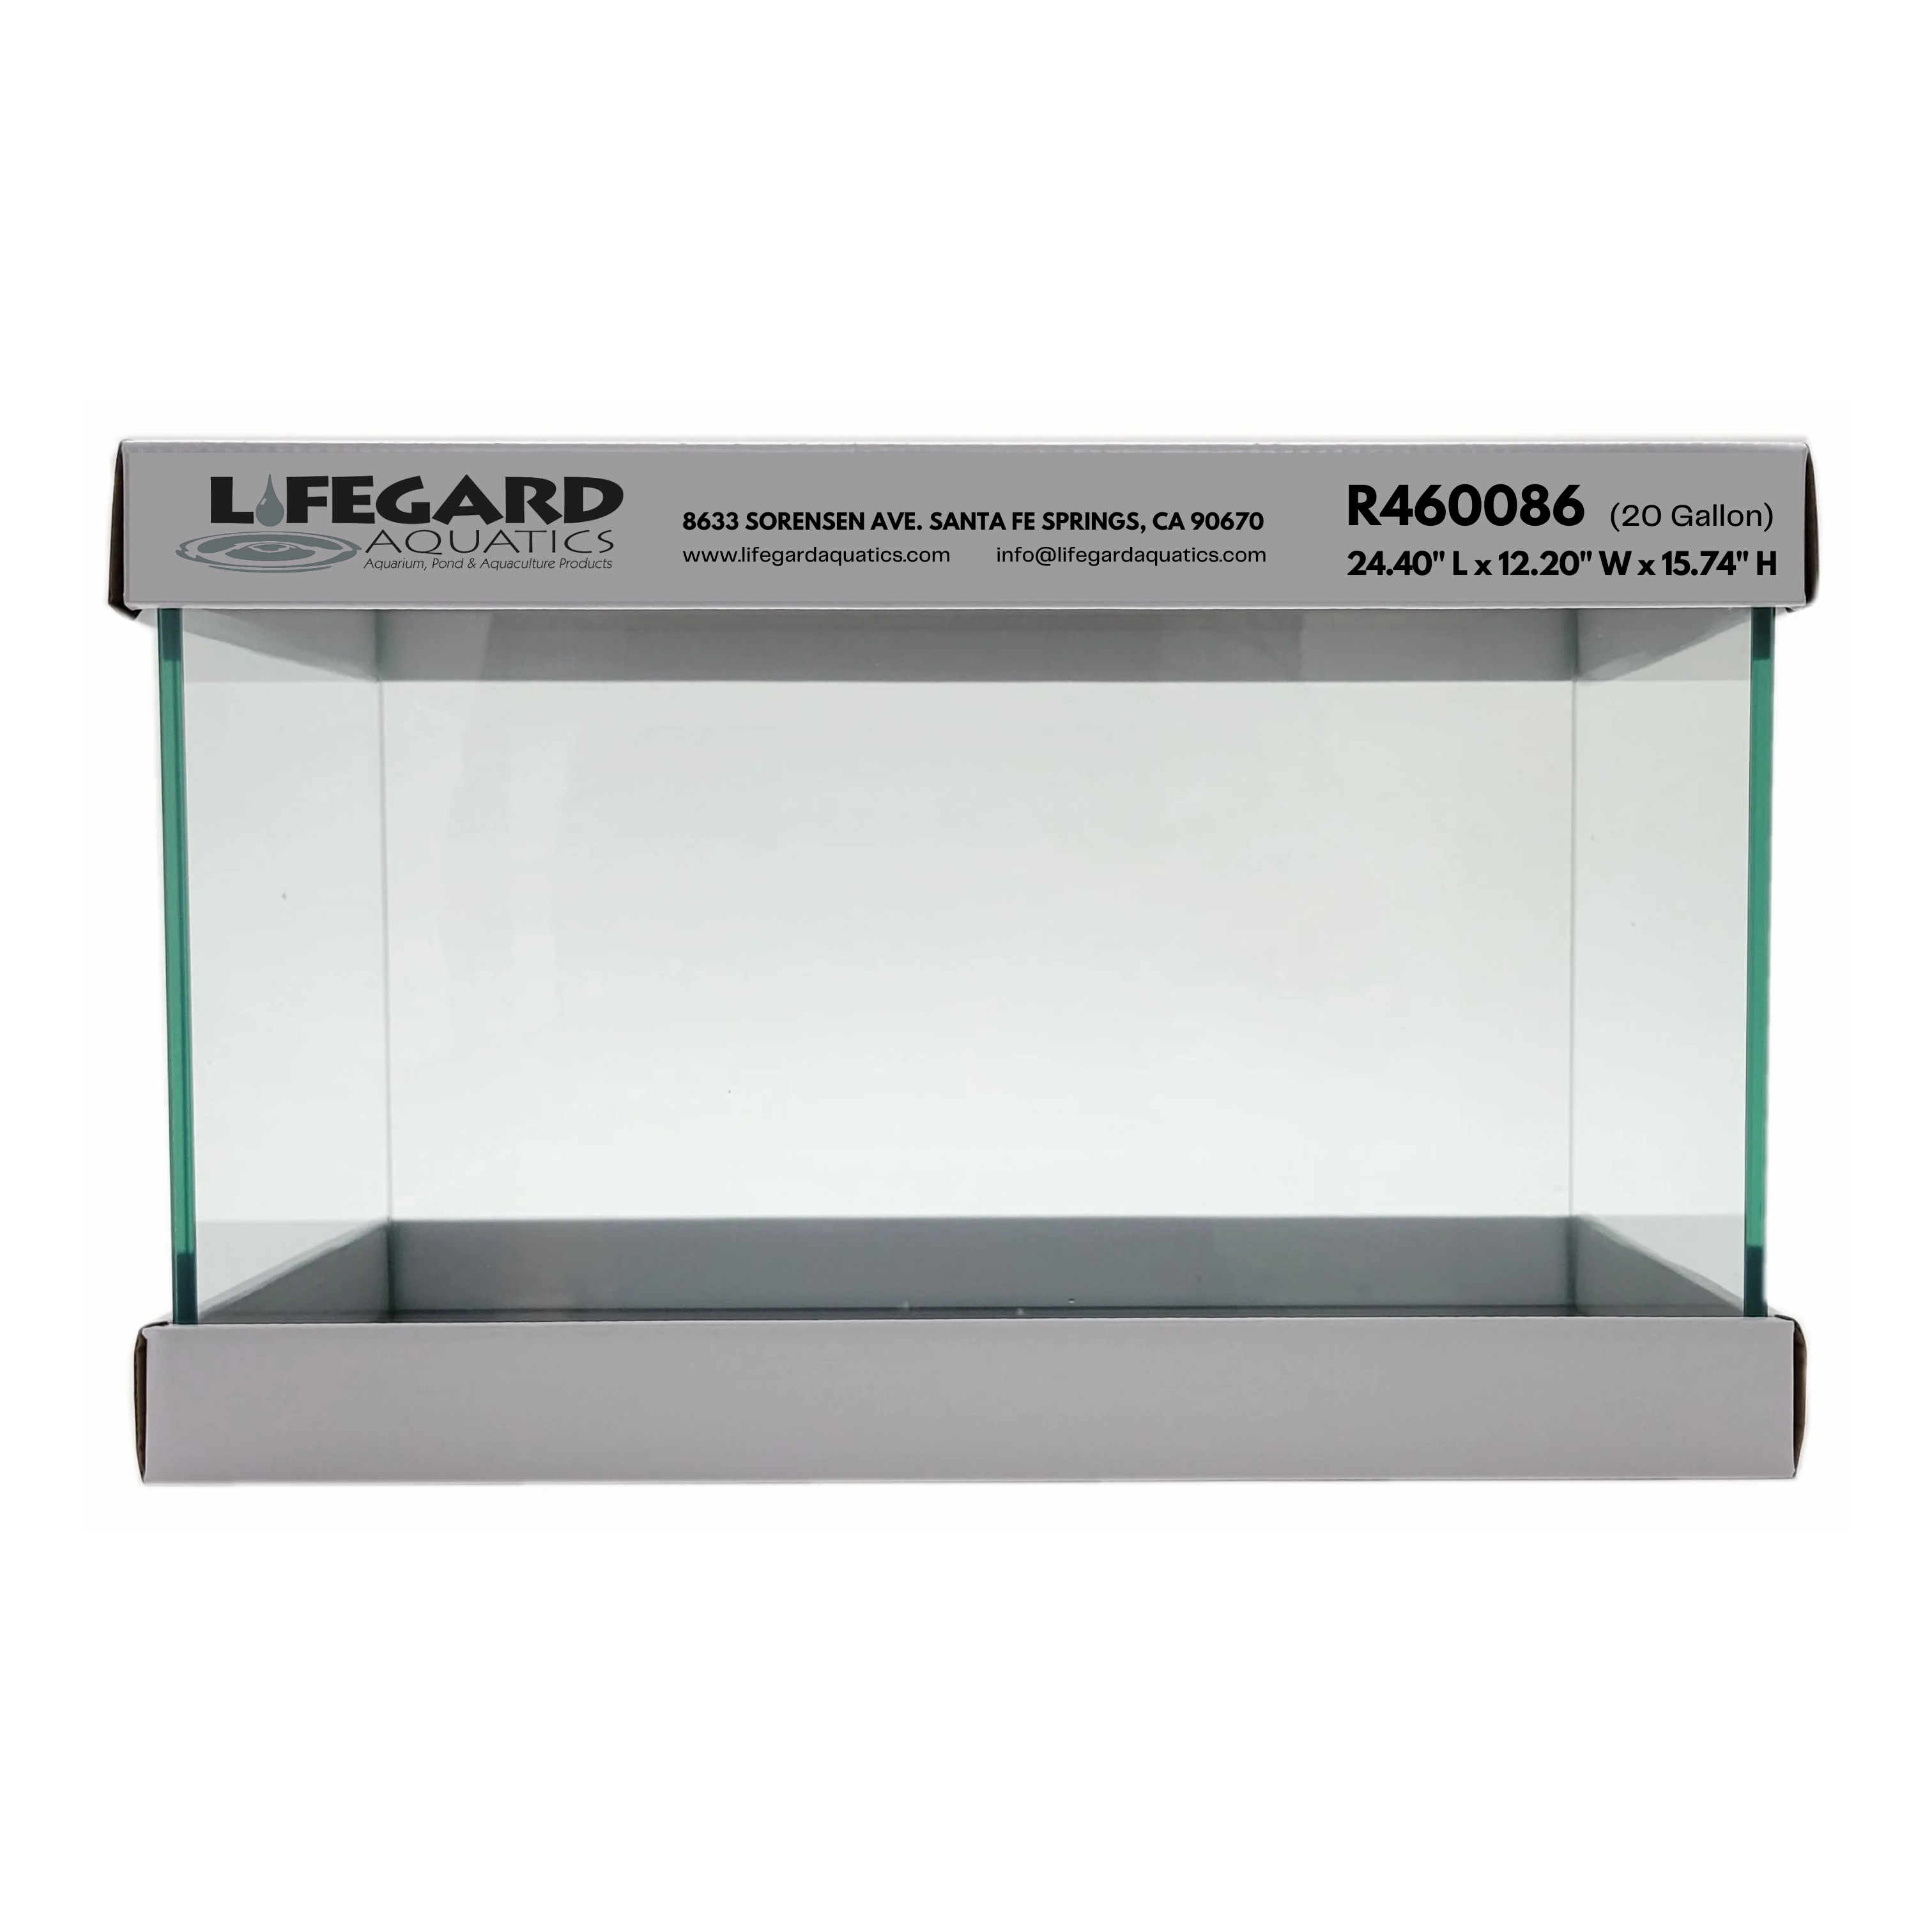 20 Gallon Rimless Aquarium (24.40"x12.20"x15.74") - Lifegard Aquatics